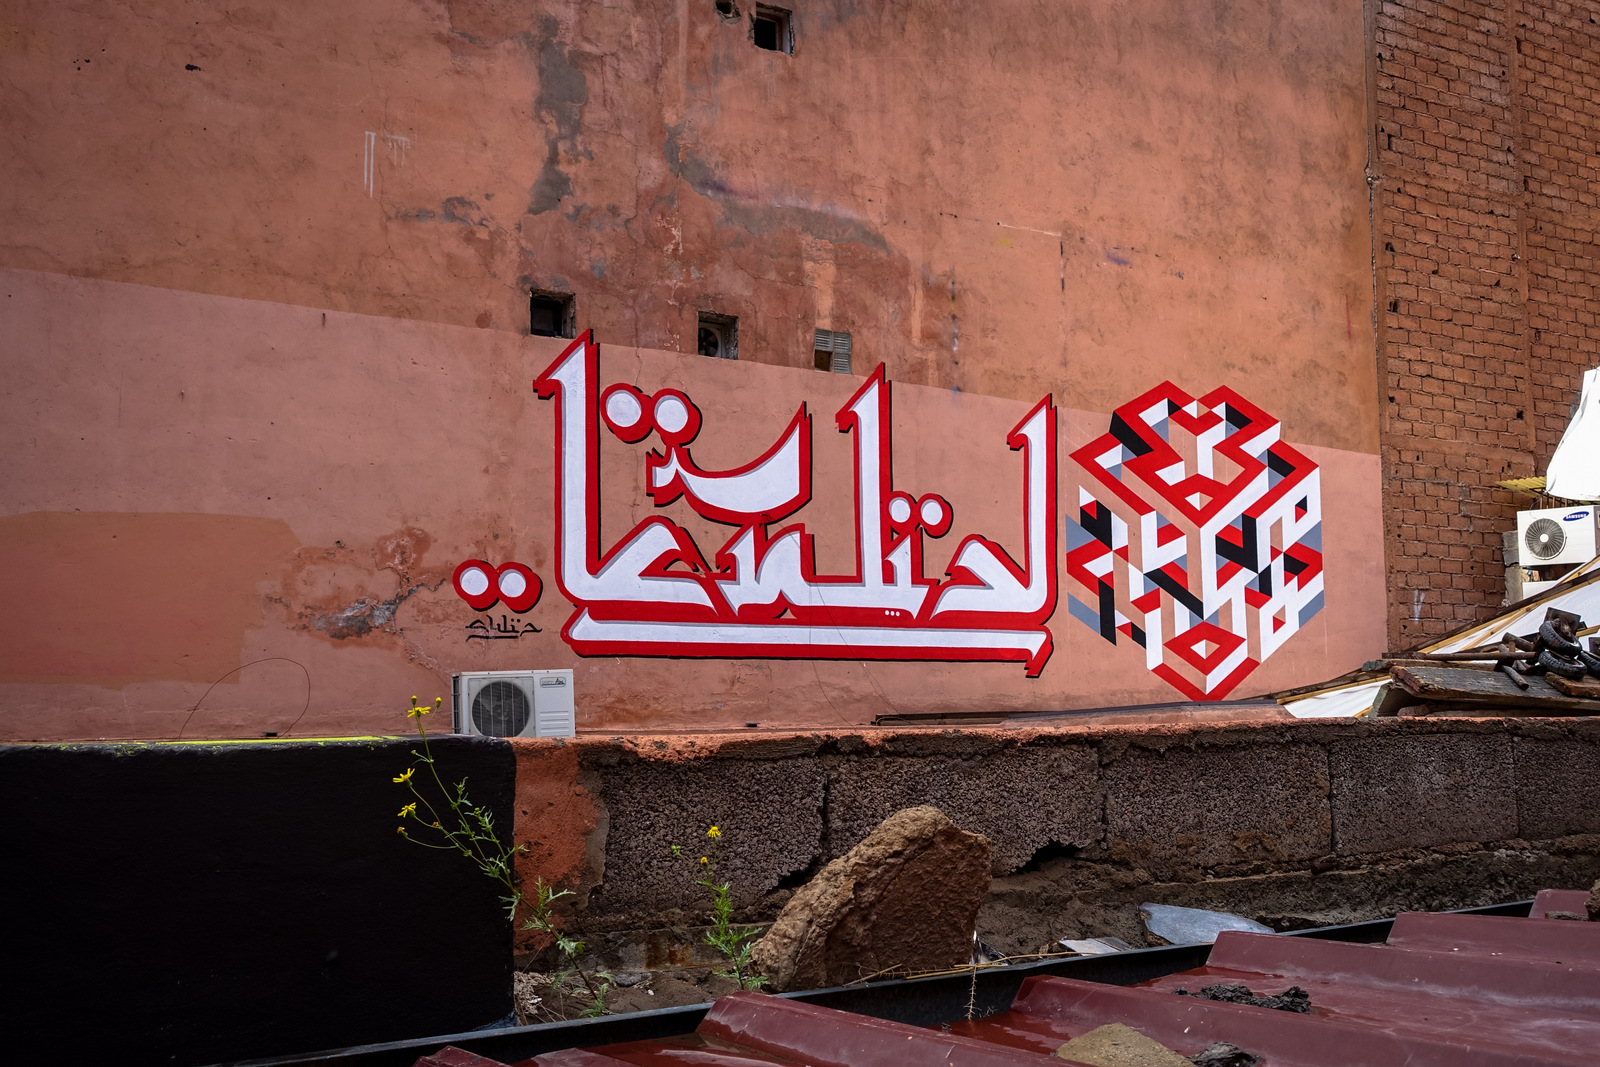 lx.one, swizz & kofie murals in gueliz, marrakesh | URBANPRESENTS